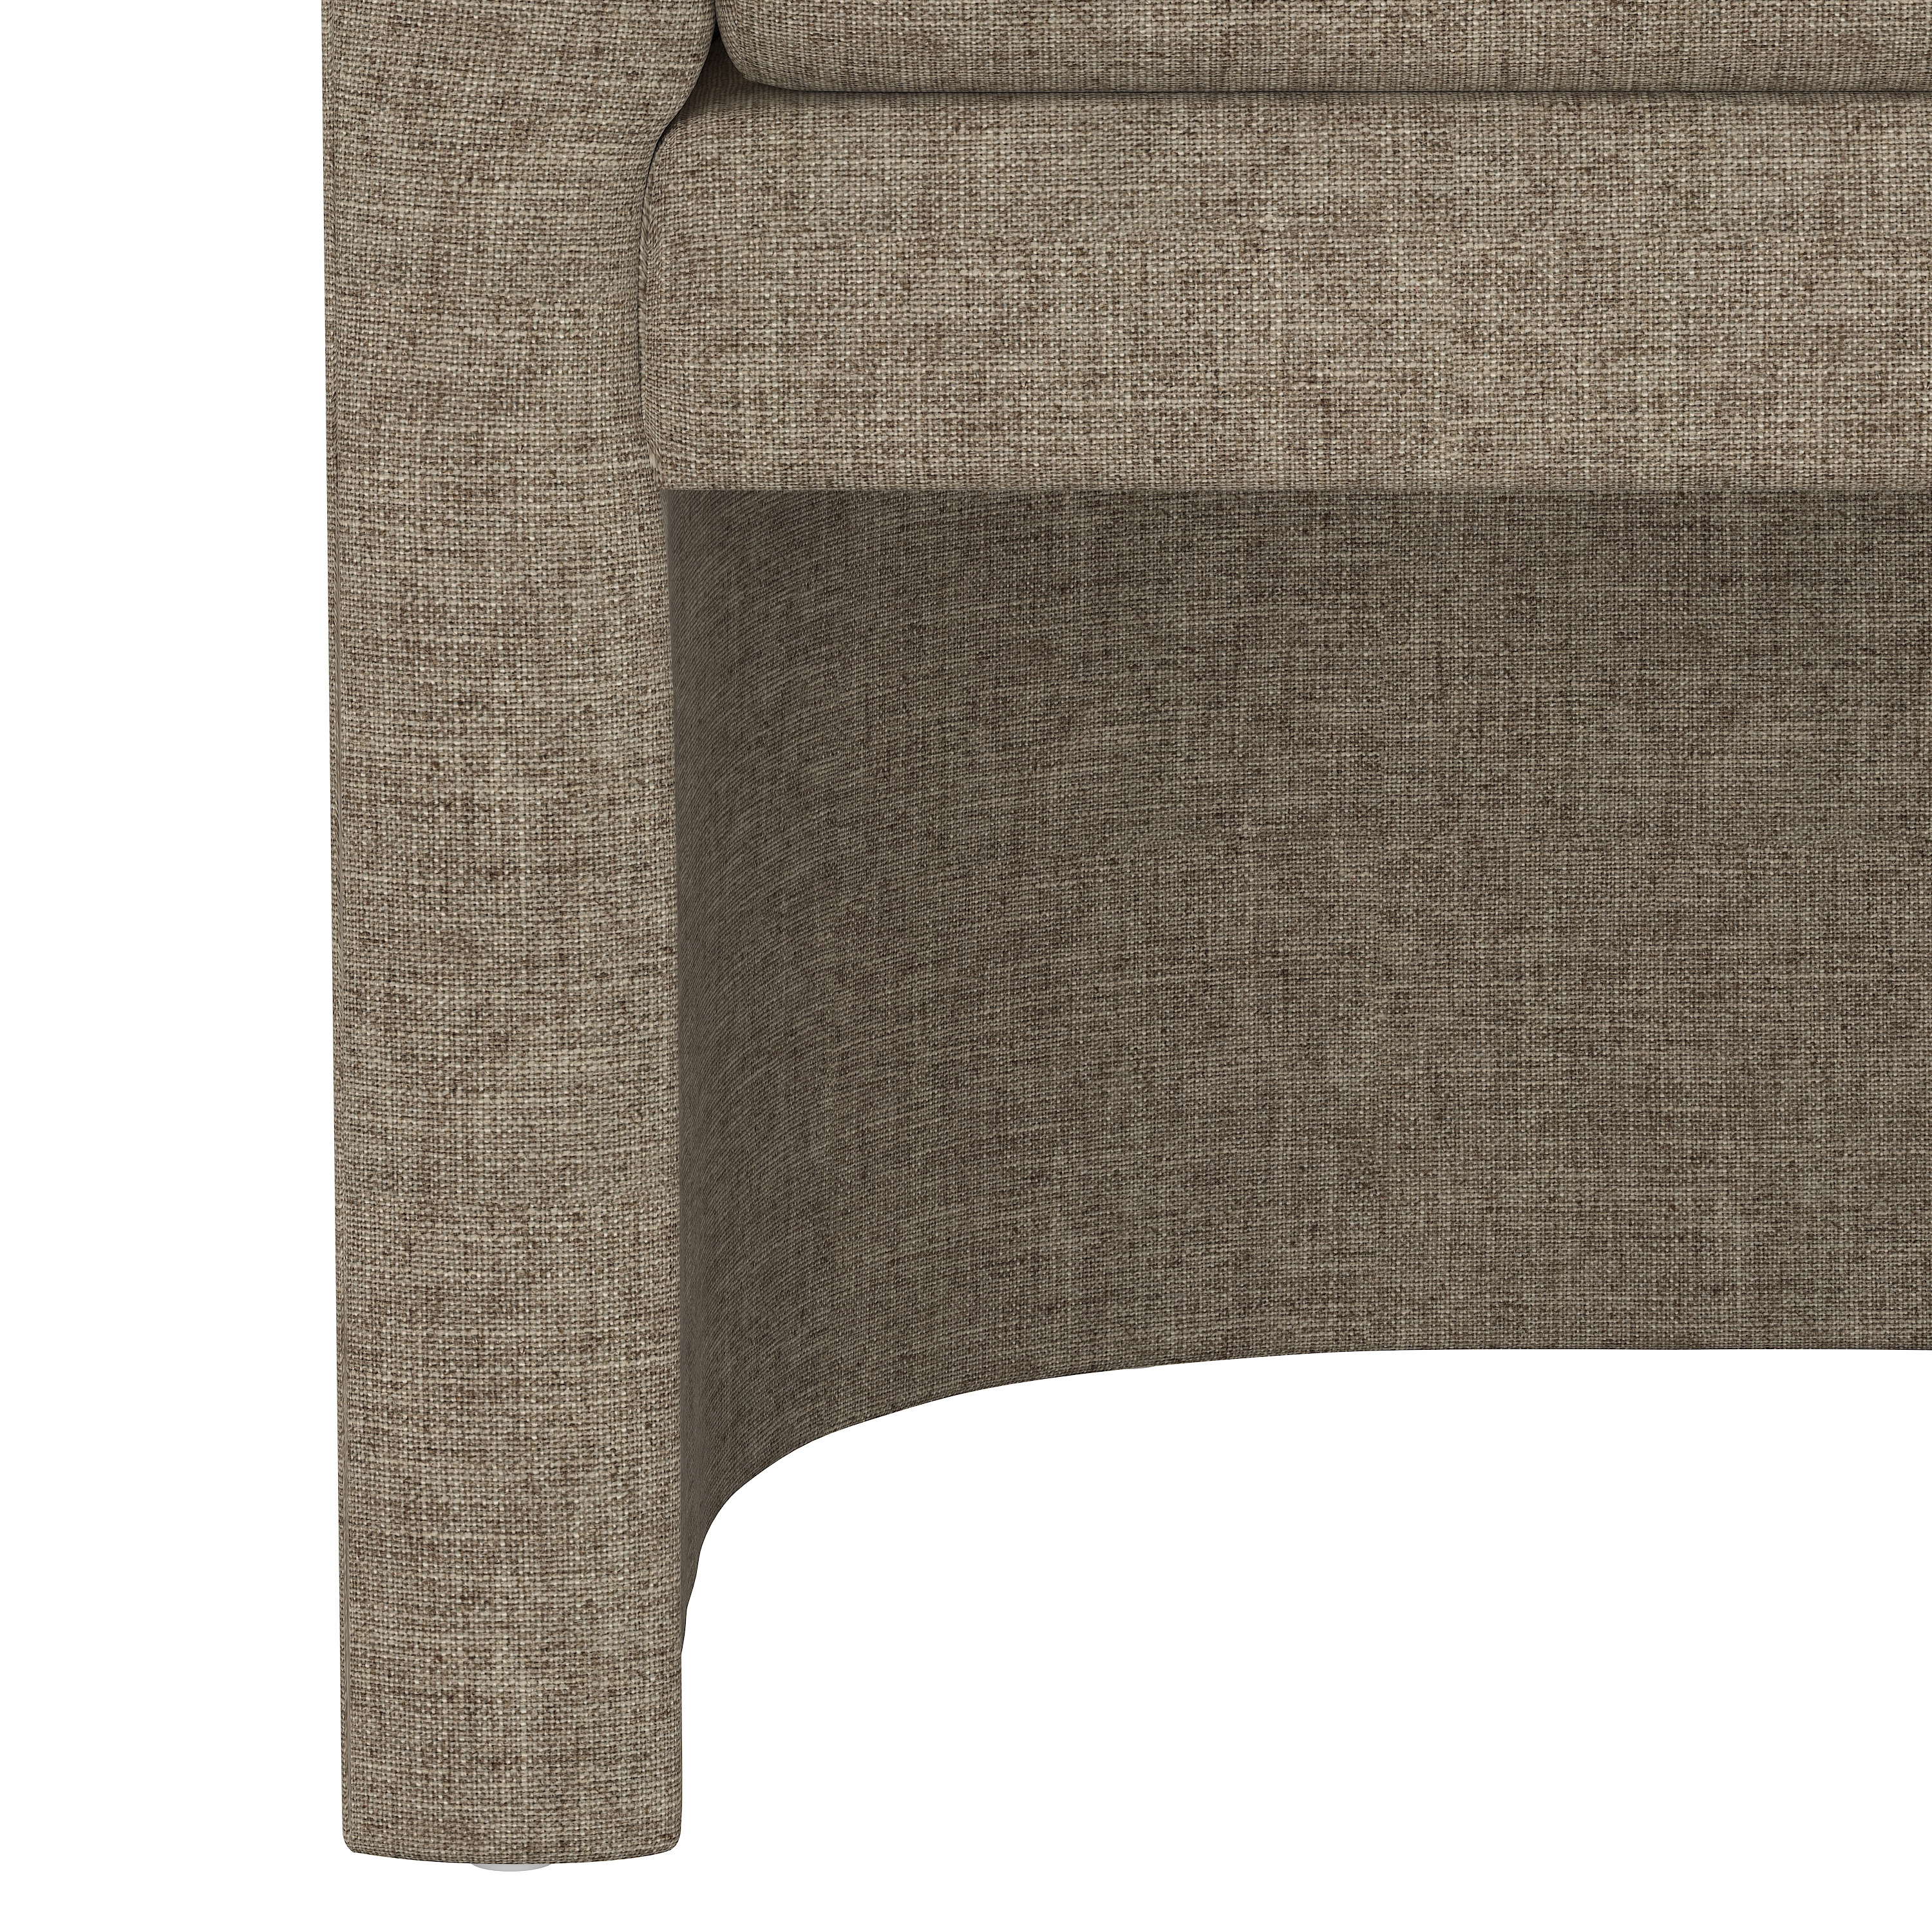 Wellshire Chair, Linen - Image 4